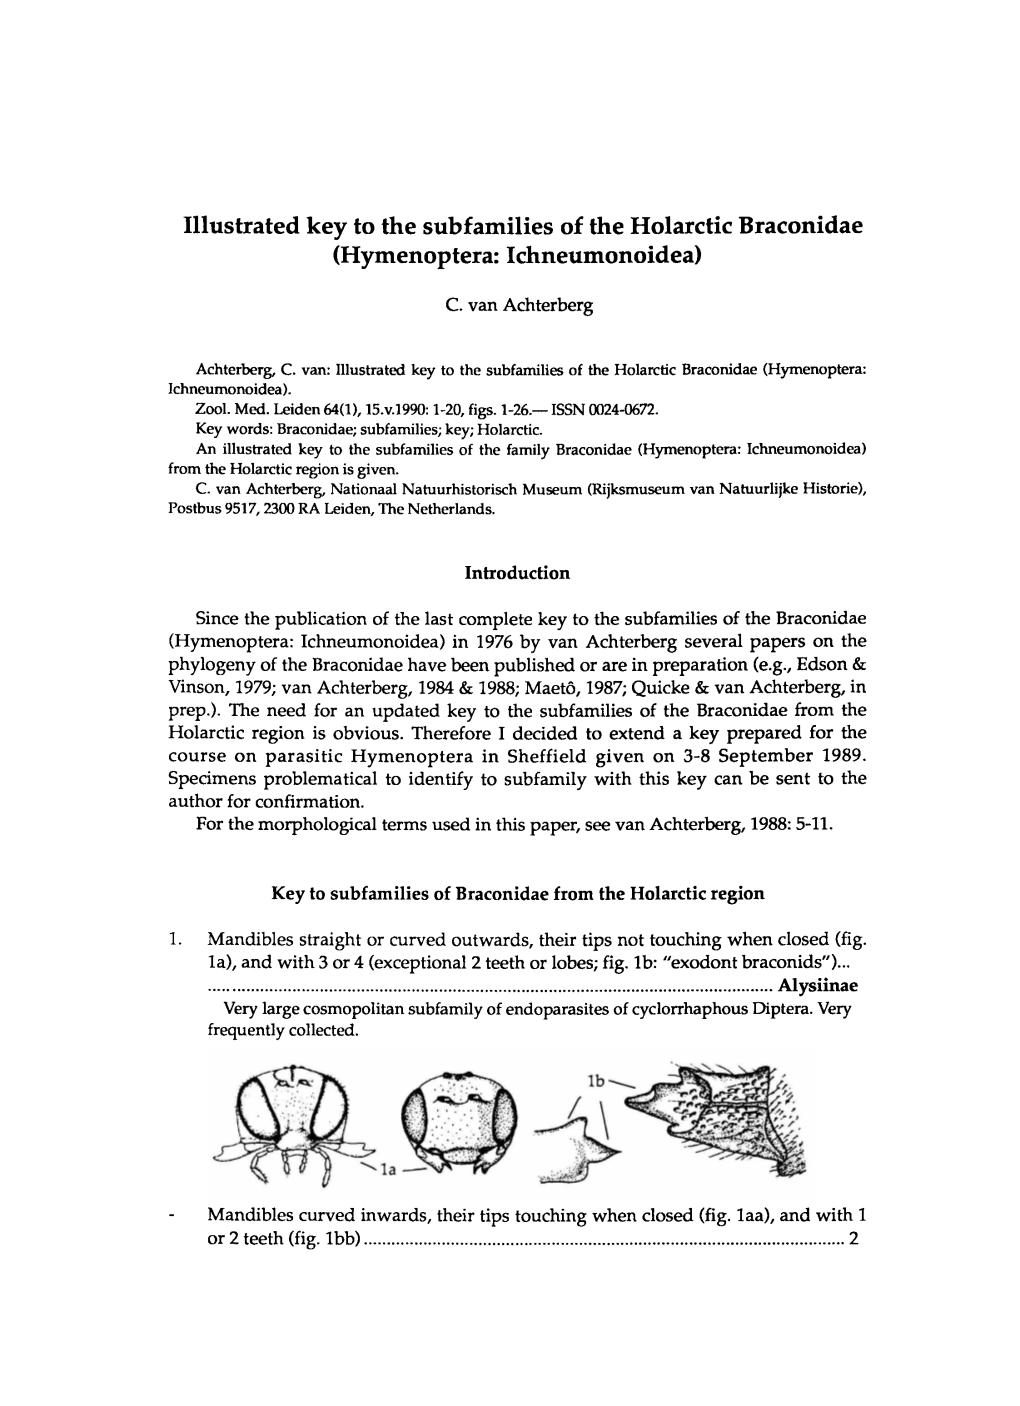 Illustrated Key to the Subfamilies of the Holarctic Braconidae (Hymenoptera: Ichneumonoidea)